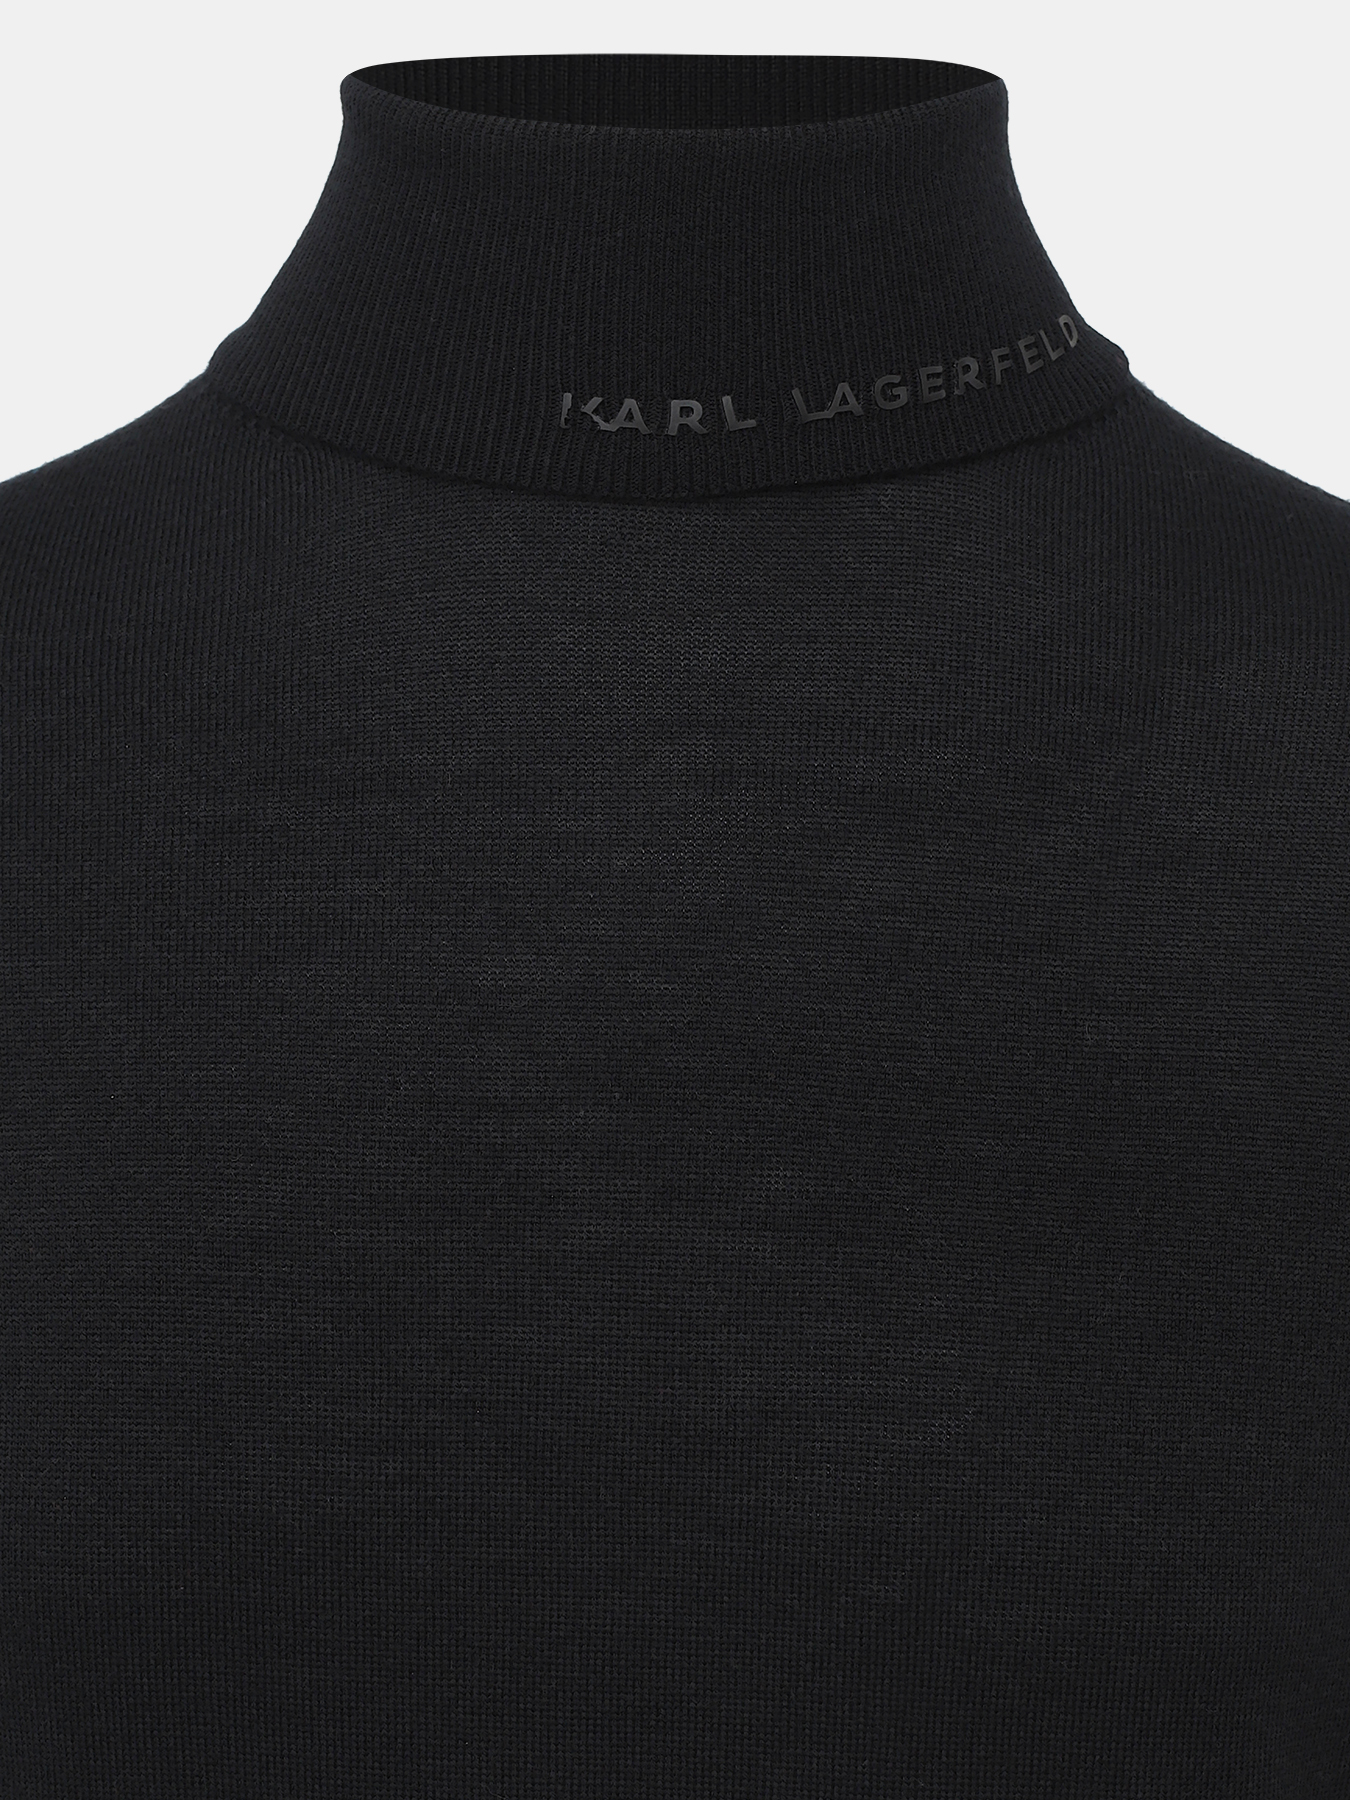 Свитер Karl Lagerfeld 420304-046, цвет черный, размер 54-56 - фото 2